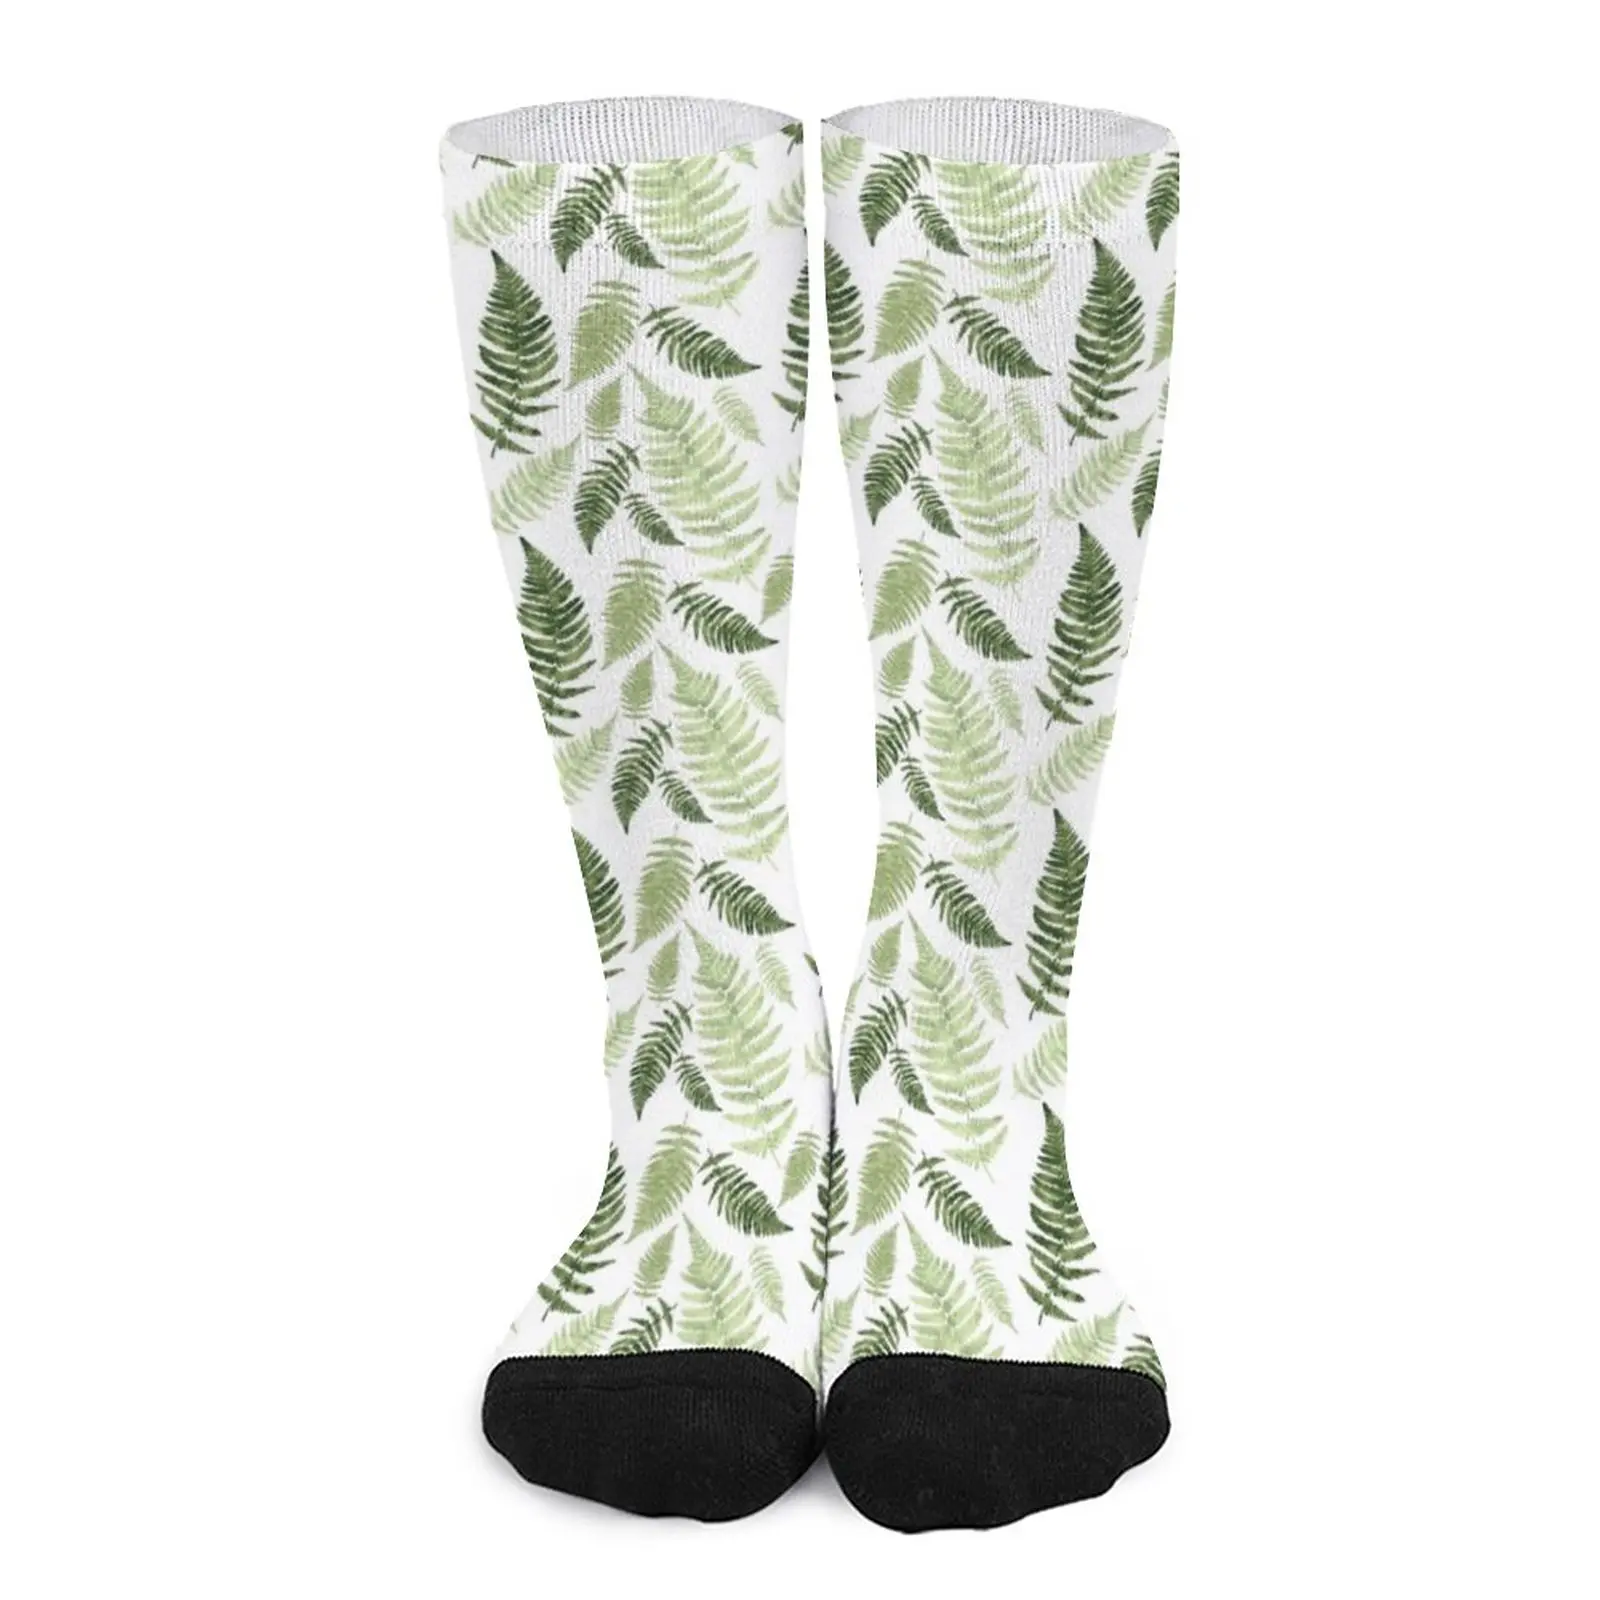 Green Ferns on White Socks basketball socks new in Men's socks Womens socks hockey nike air force 1 07 se first use sail green noise da8302 100 womens sneakers